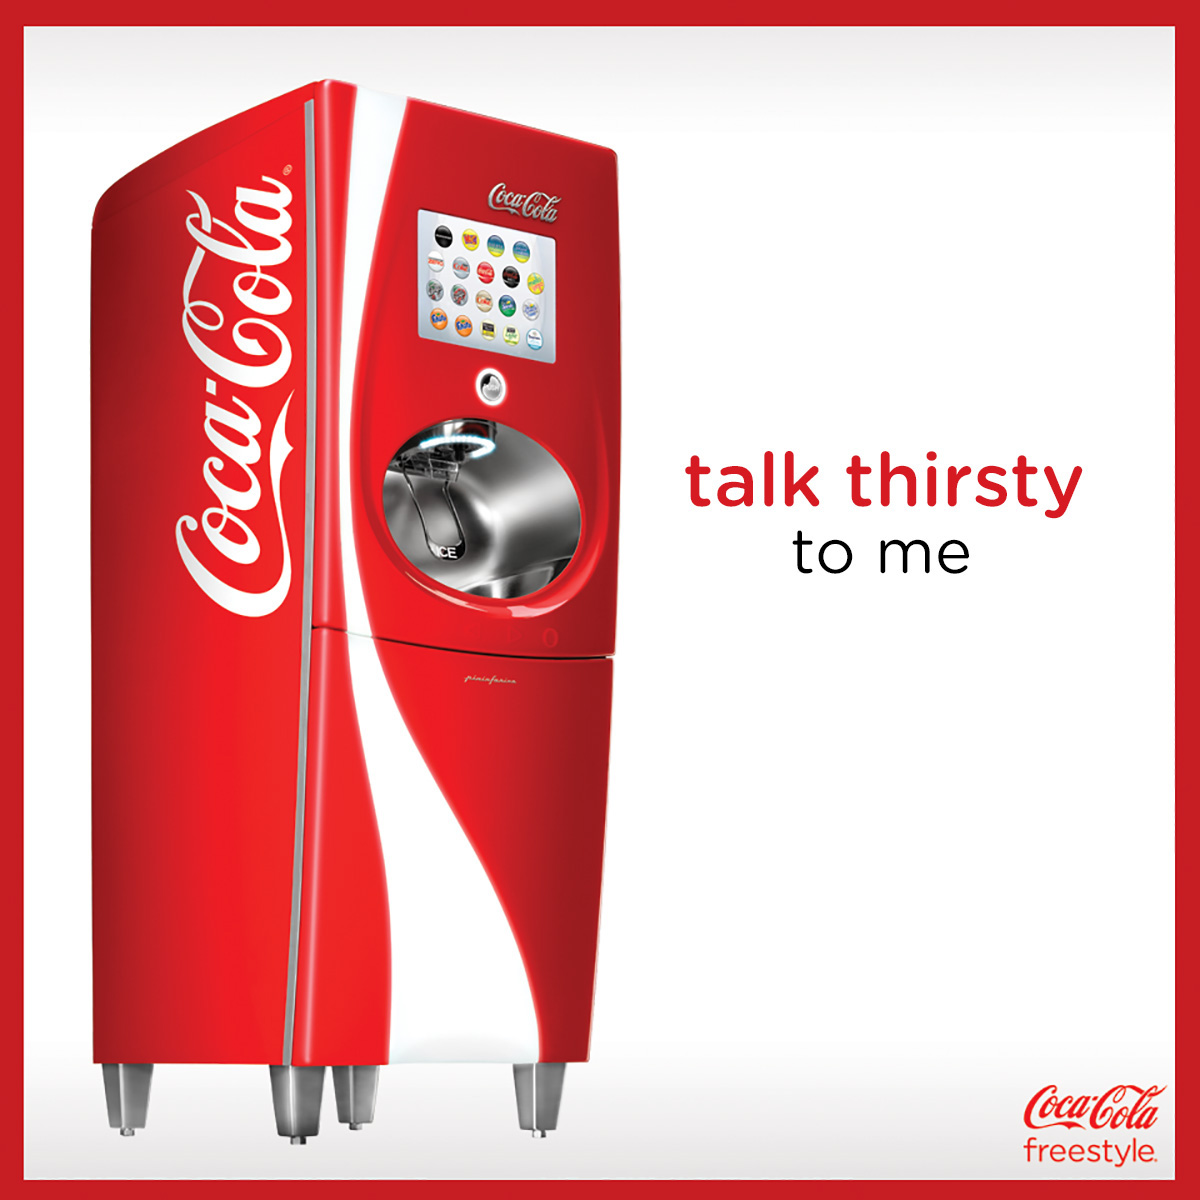 coke cocacola Coca-Cola soda vendng digital experience design beverage